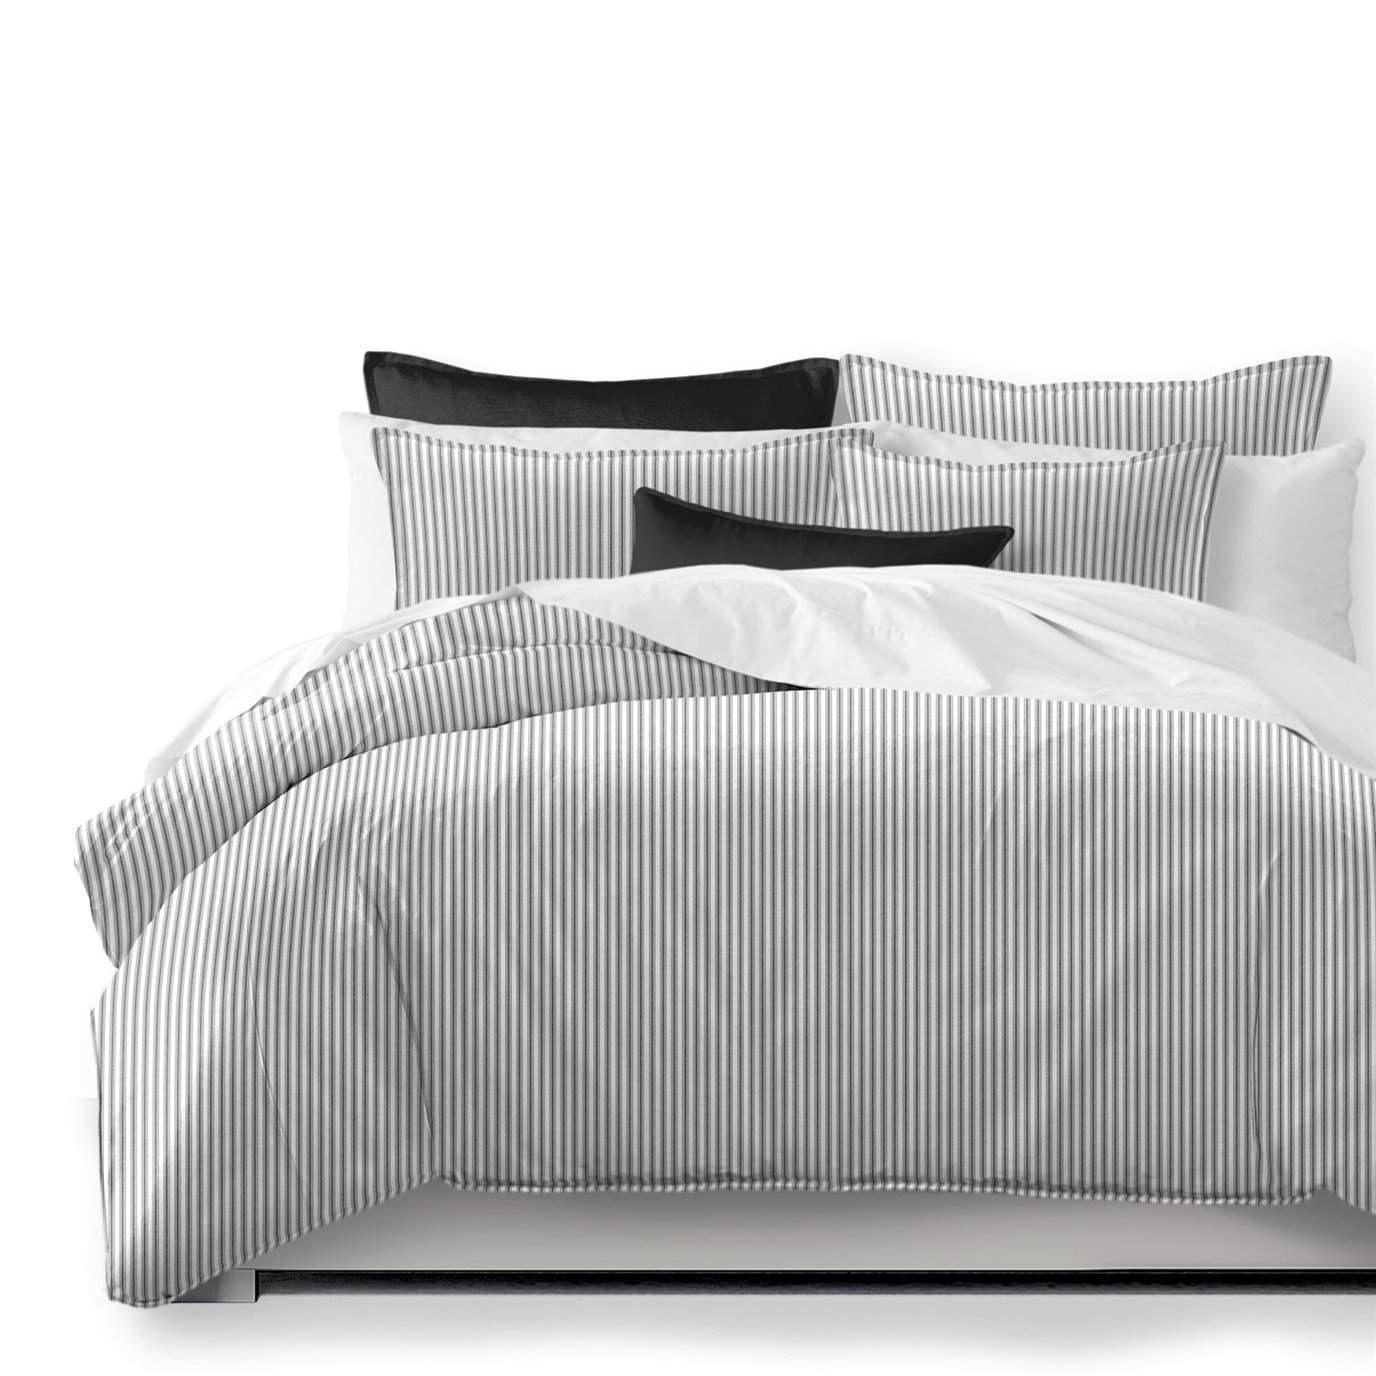 Cruz Ticking Stripes White/Black Comforter and Pillow Sham(s) Set - Size Queen